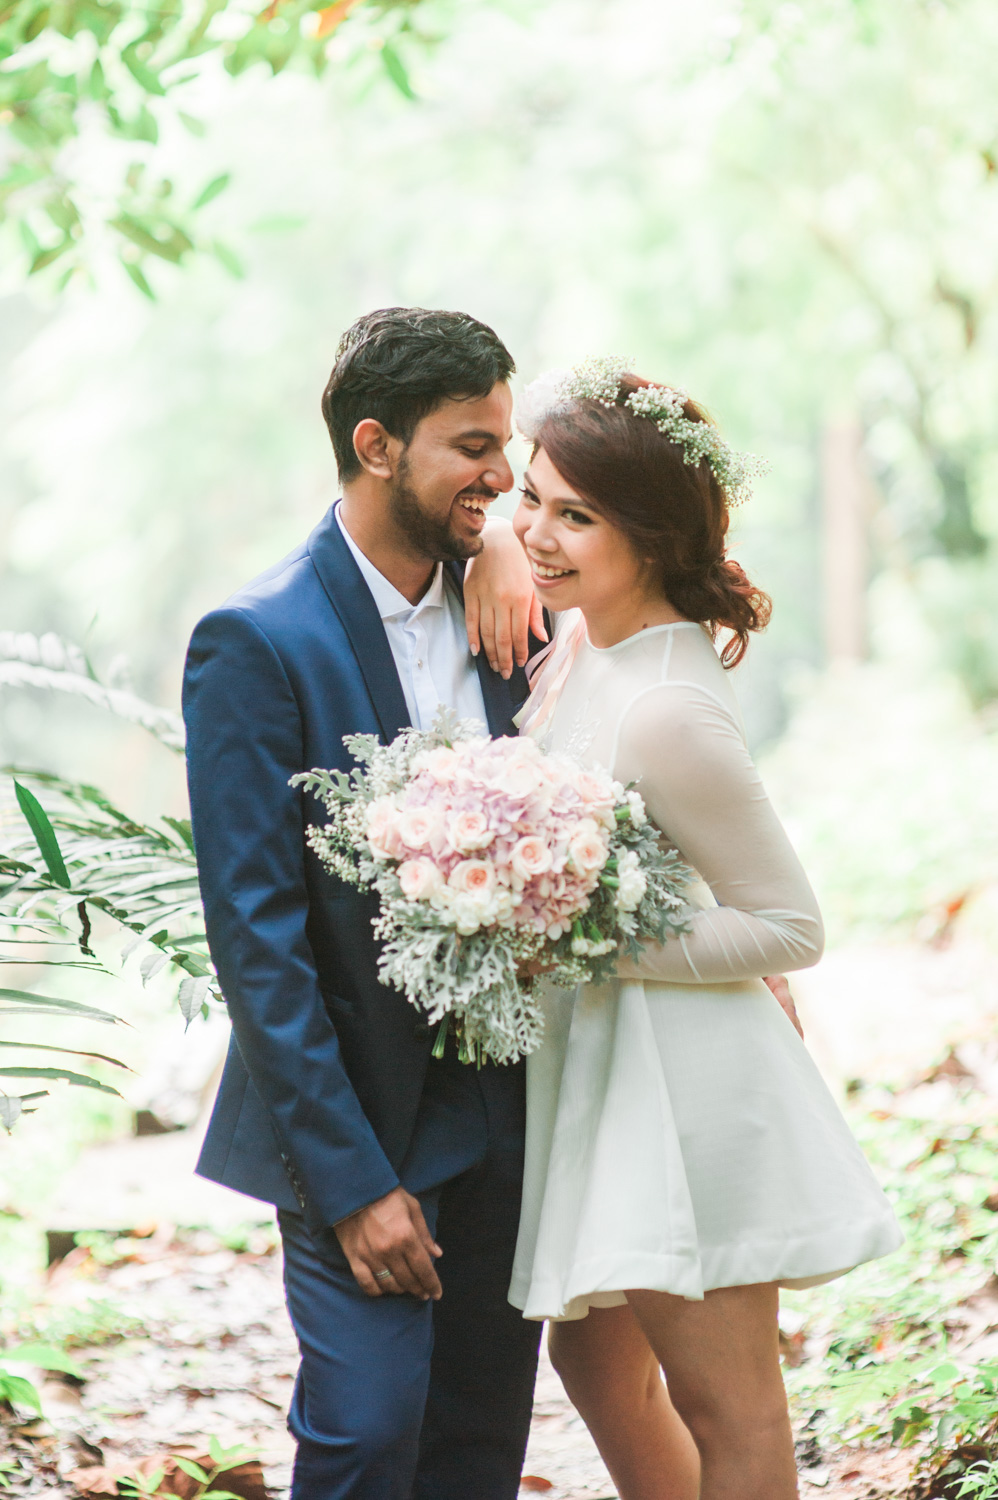 FRIM-Kuala-lumpur-jungle-style-pre-wedding-engagement